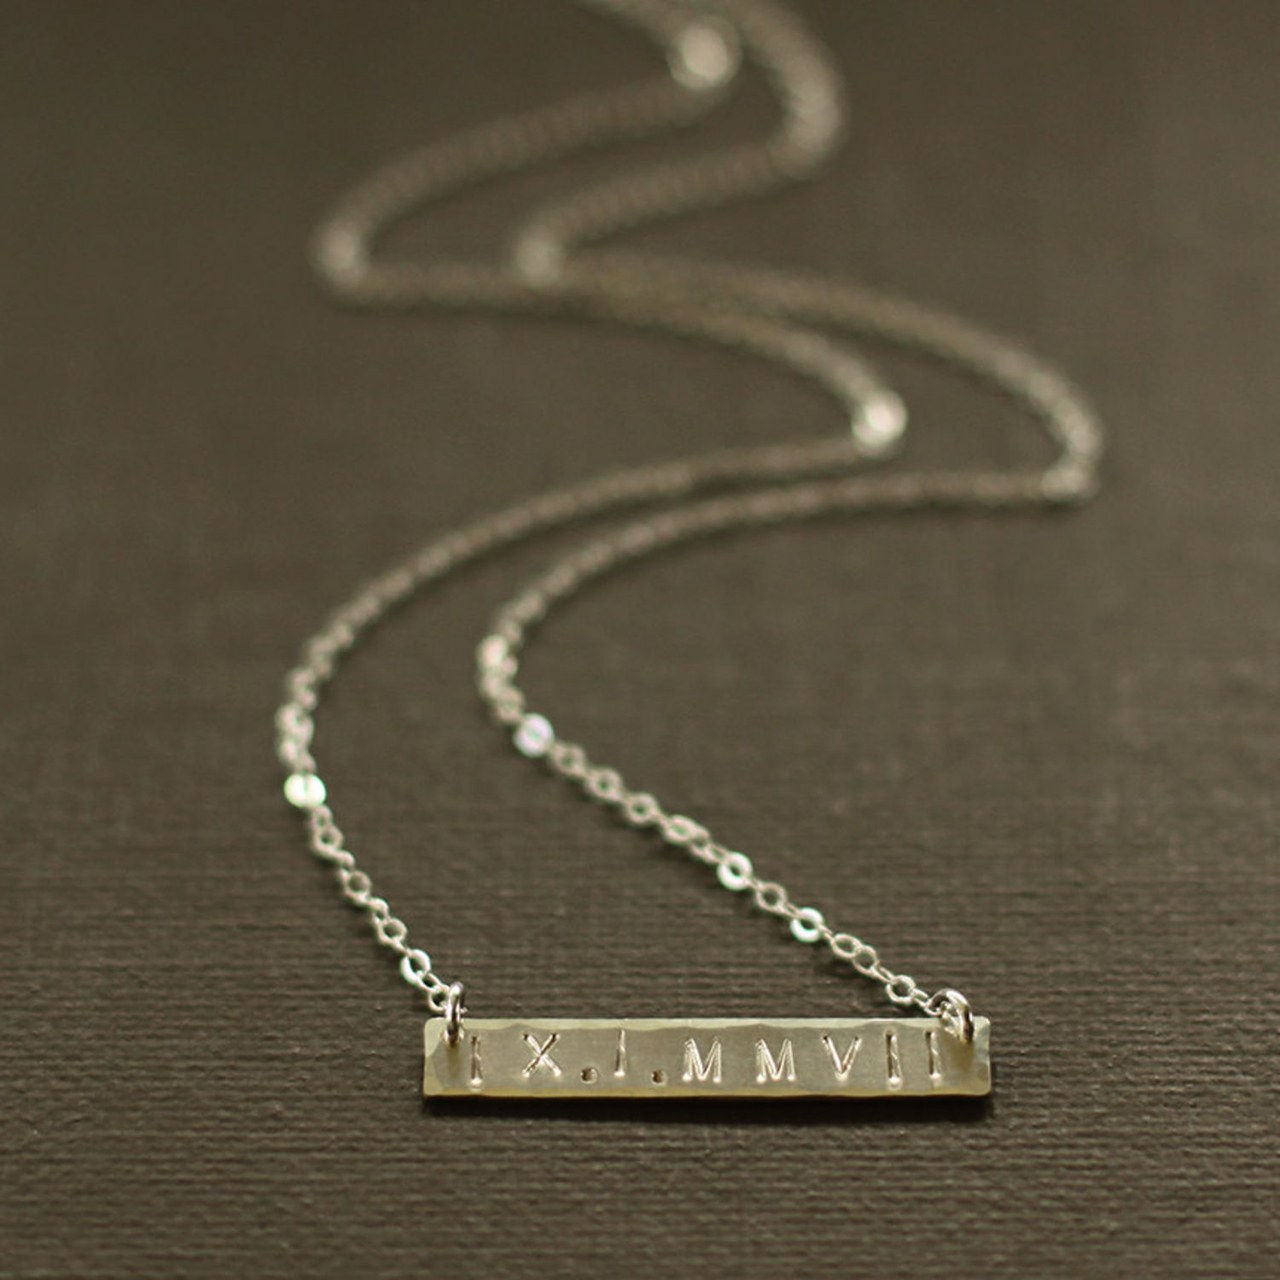 3 wedding date necklaces caldendar roman numerals stamped 0409 courtesy